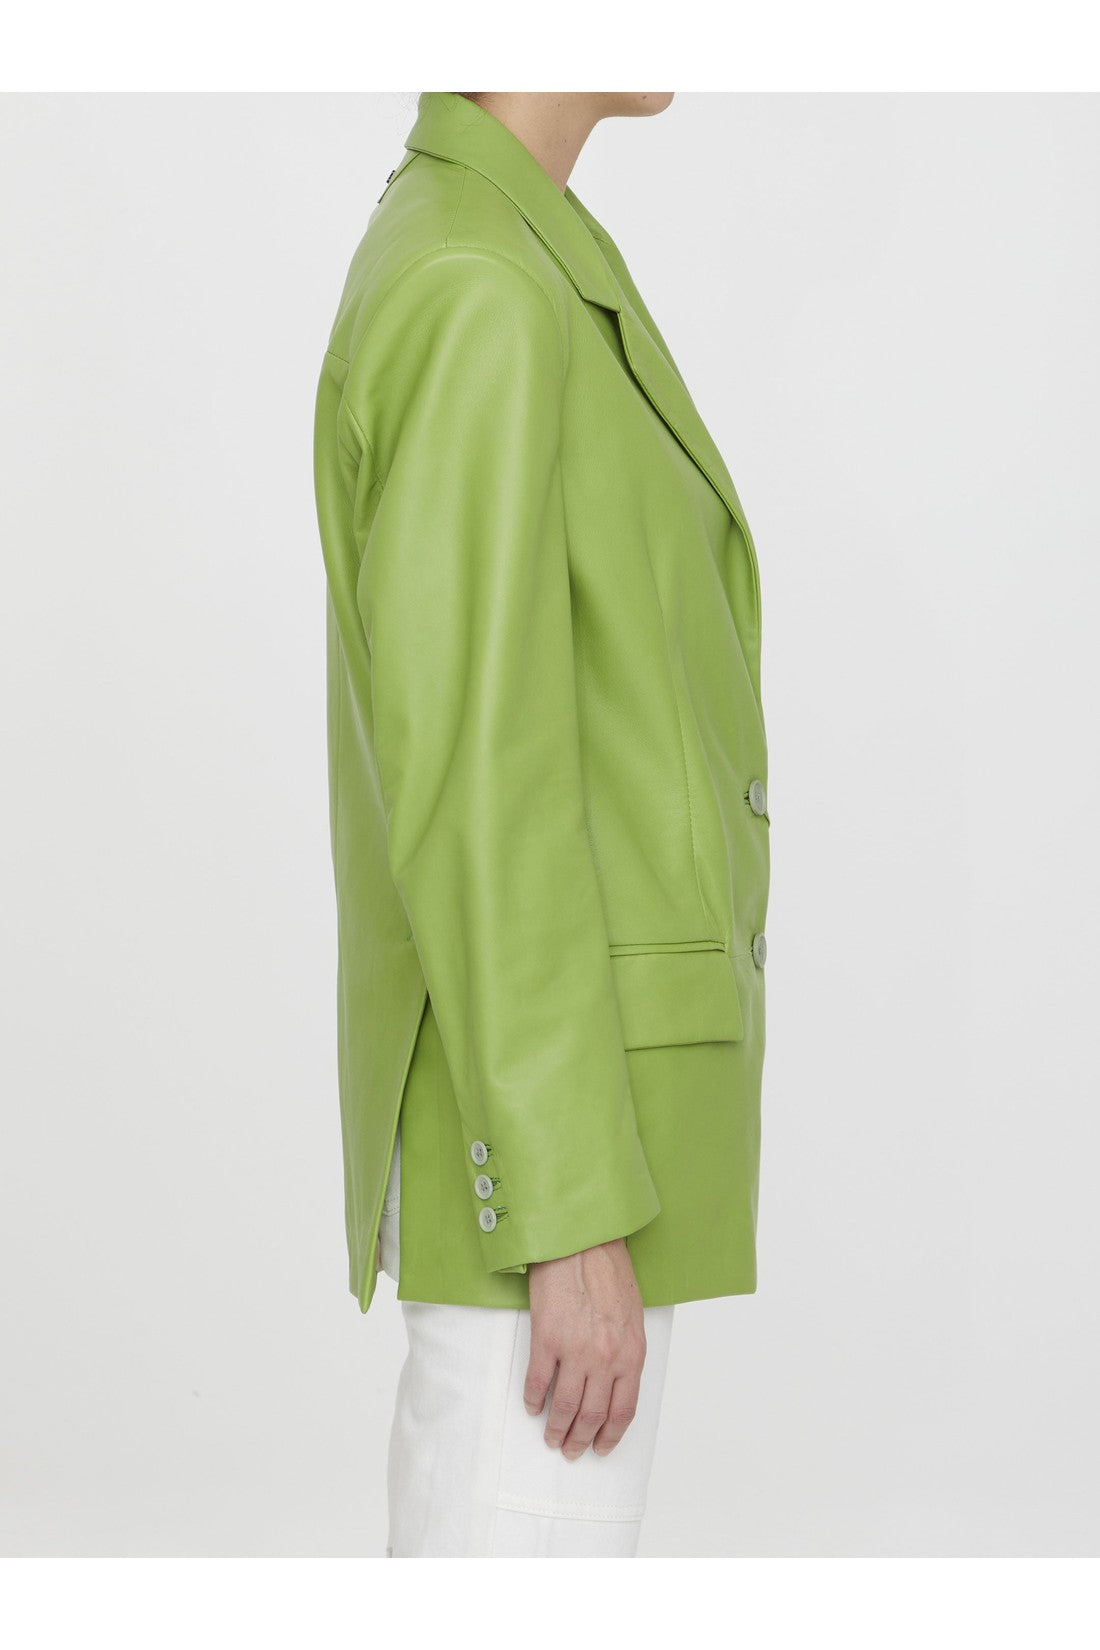 Lime leather jacket